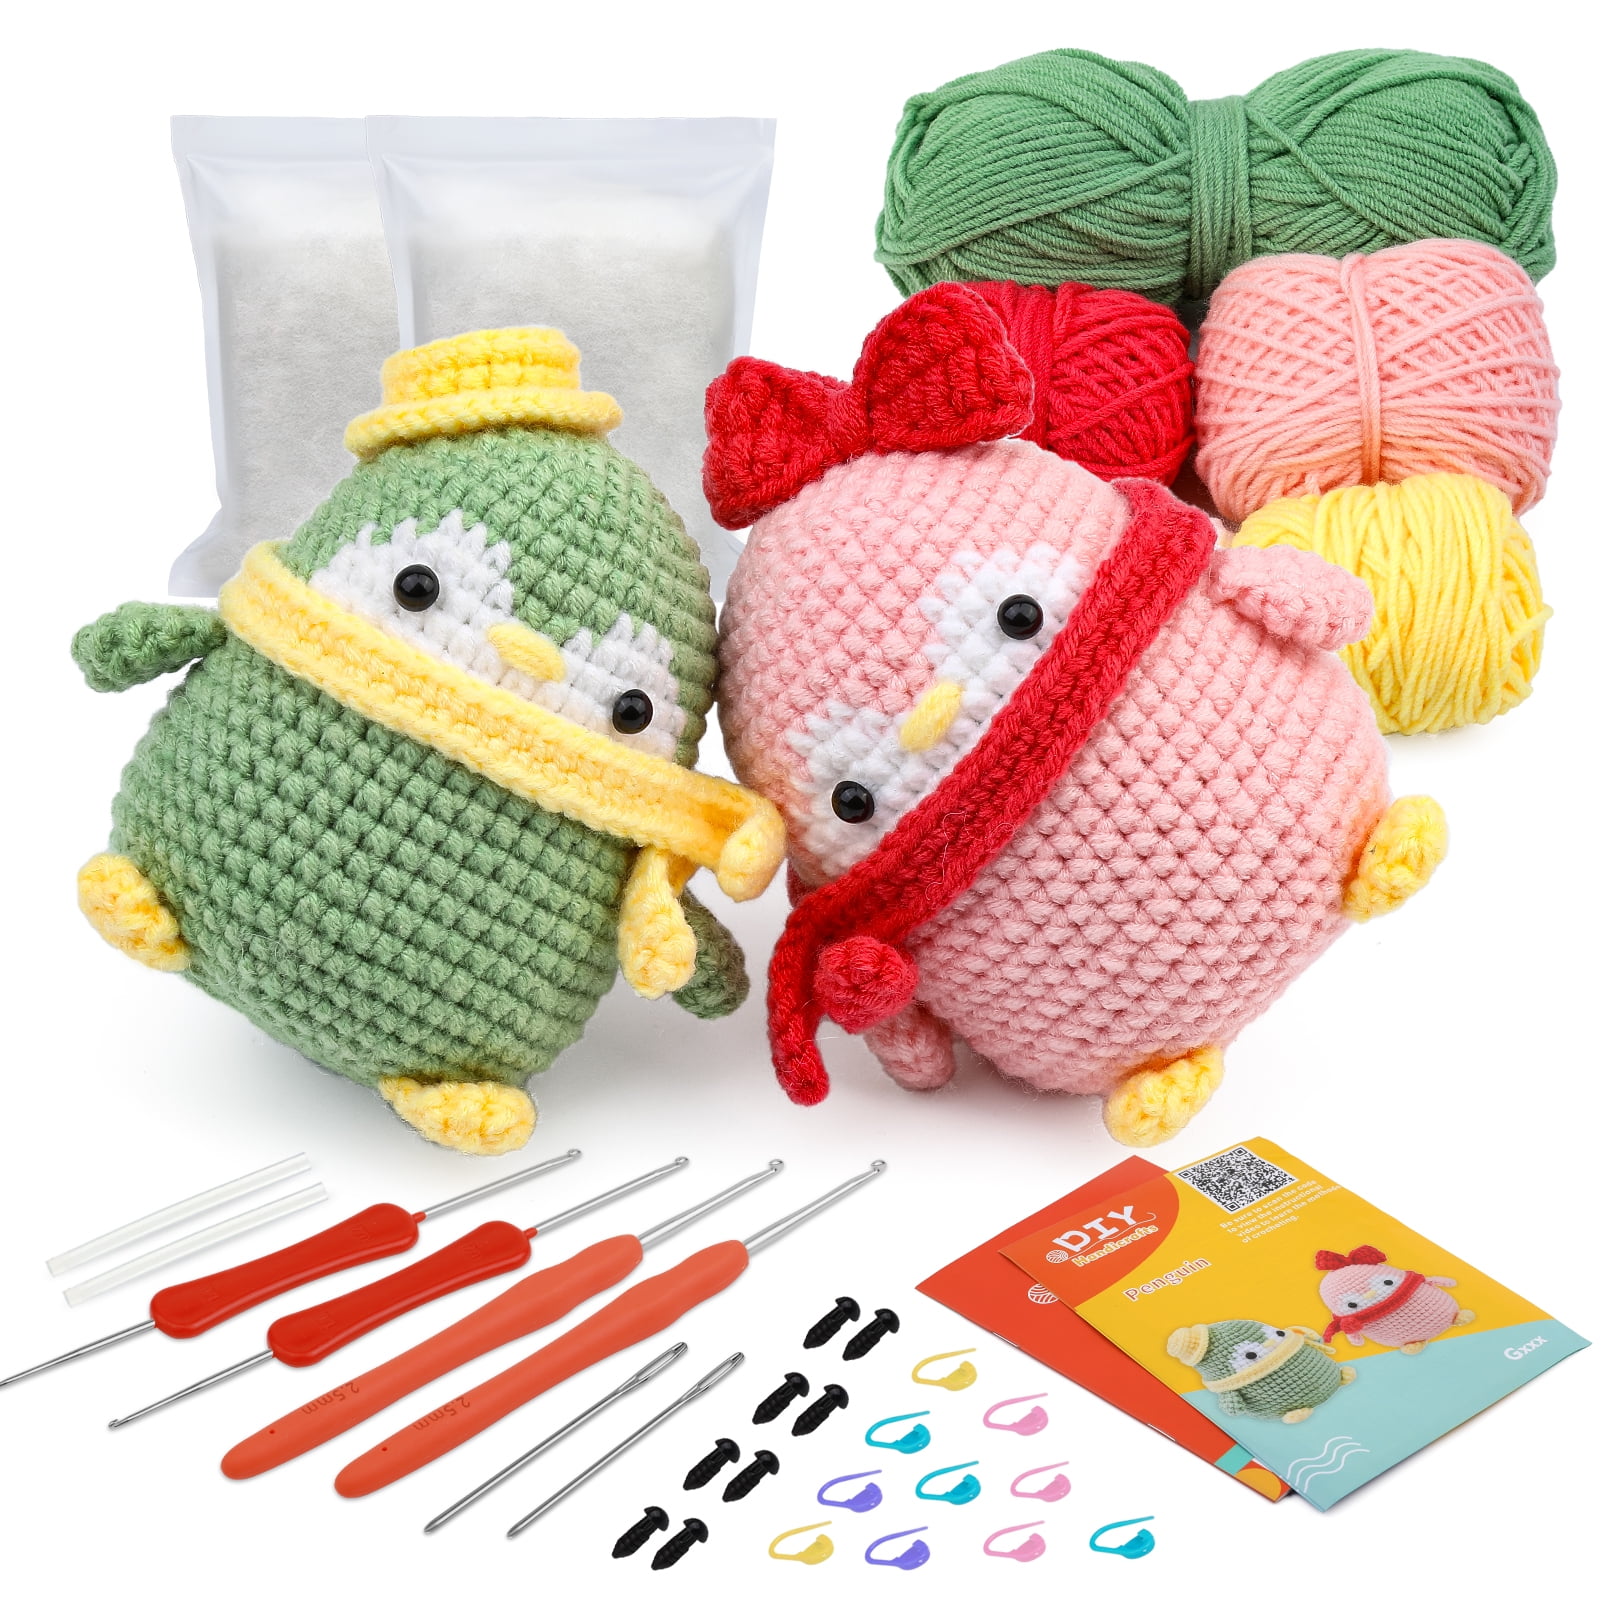  Mooaske 2pcs Crochet Kit for Beginners with Crochet Yarn -  Beginner Crochet Kit for Adults Kids with Step-by-Step Video Tutorials -  Crochet Kits Model 2pcs Dinosaur